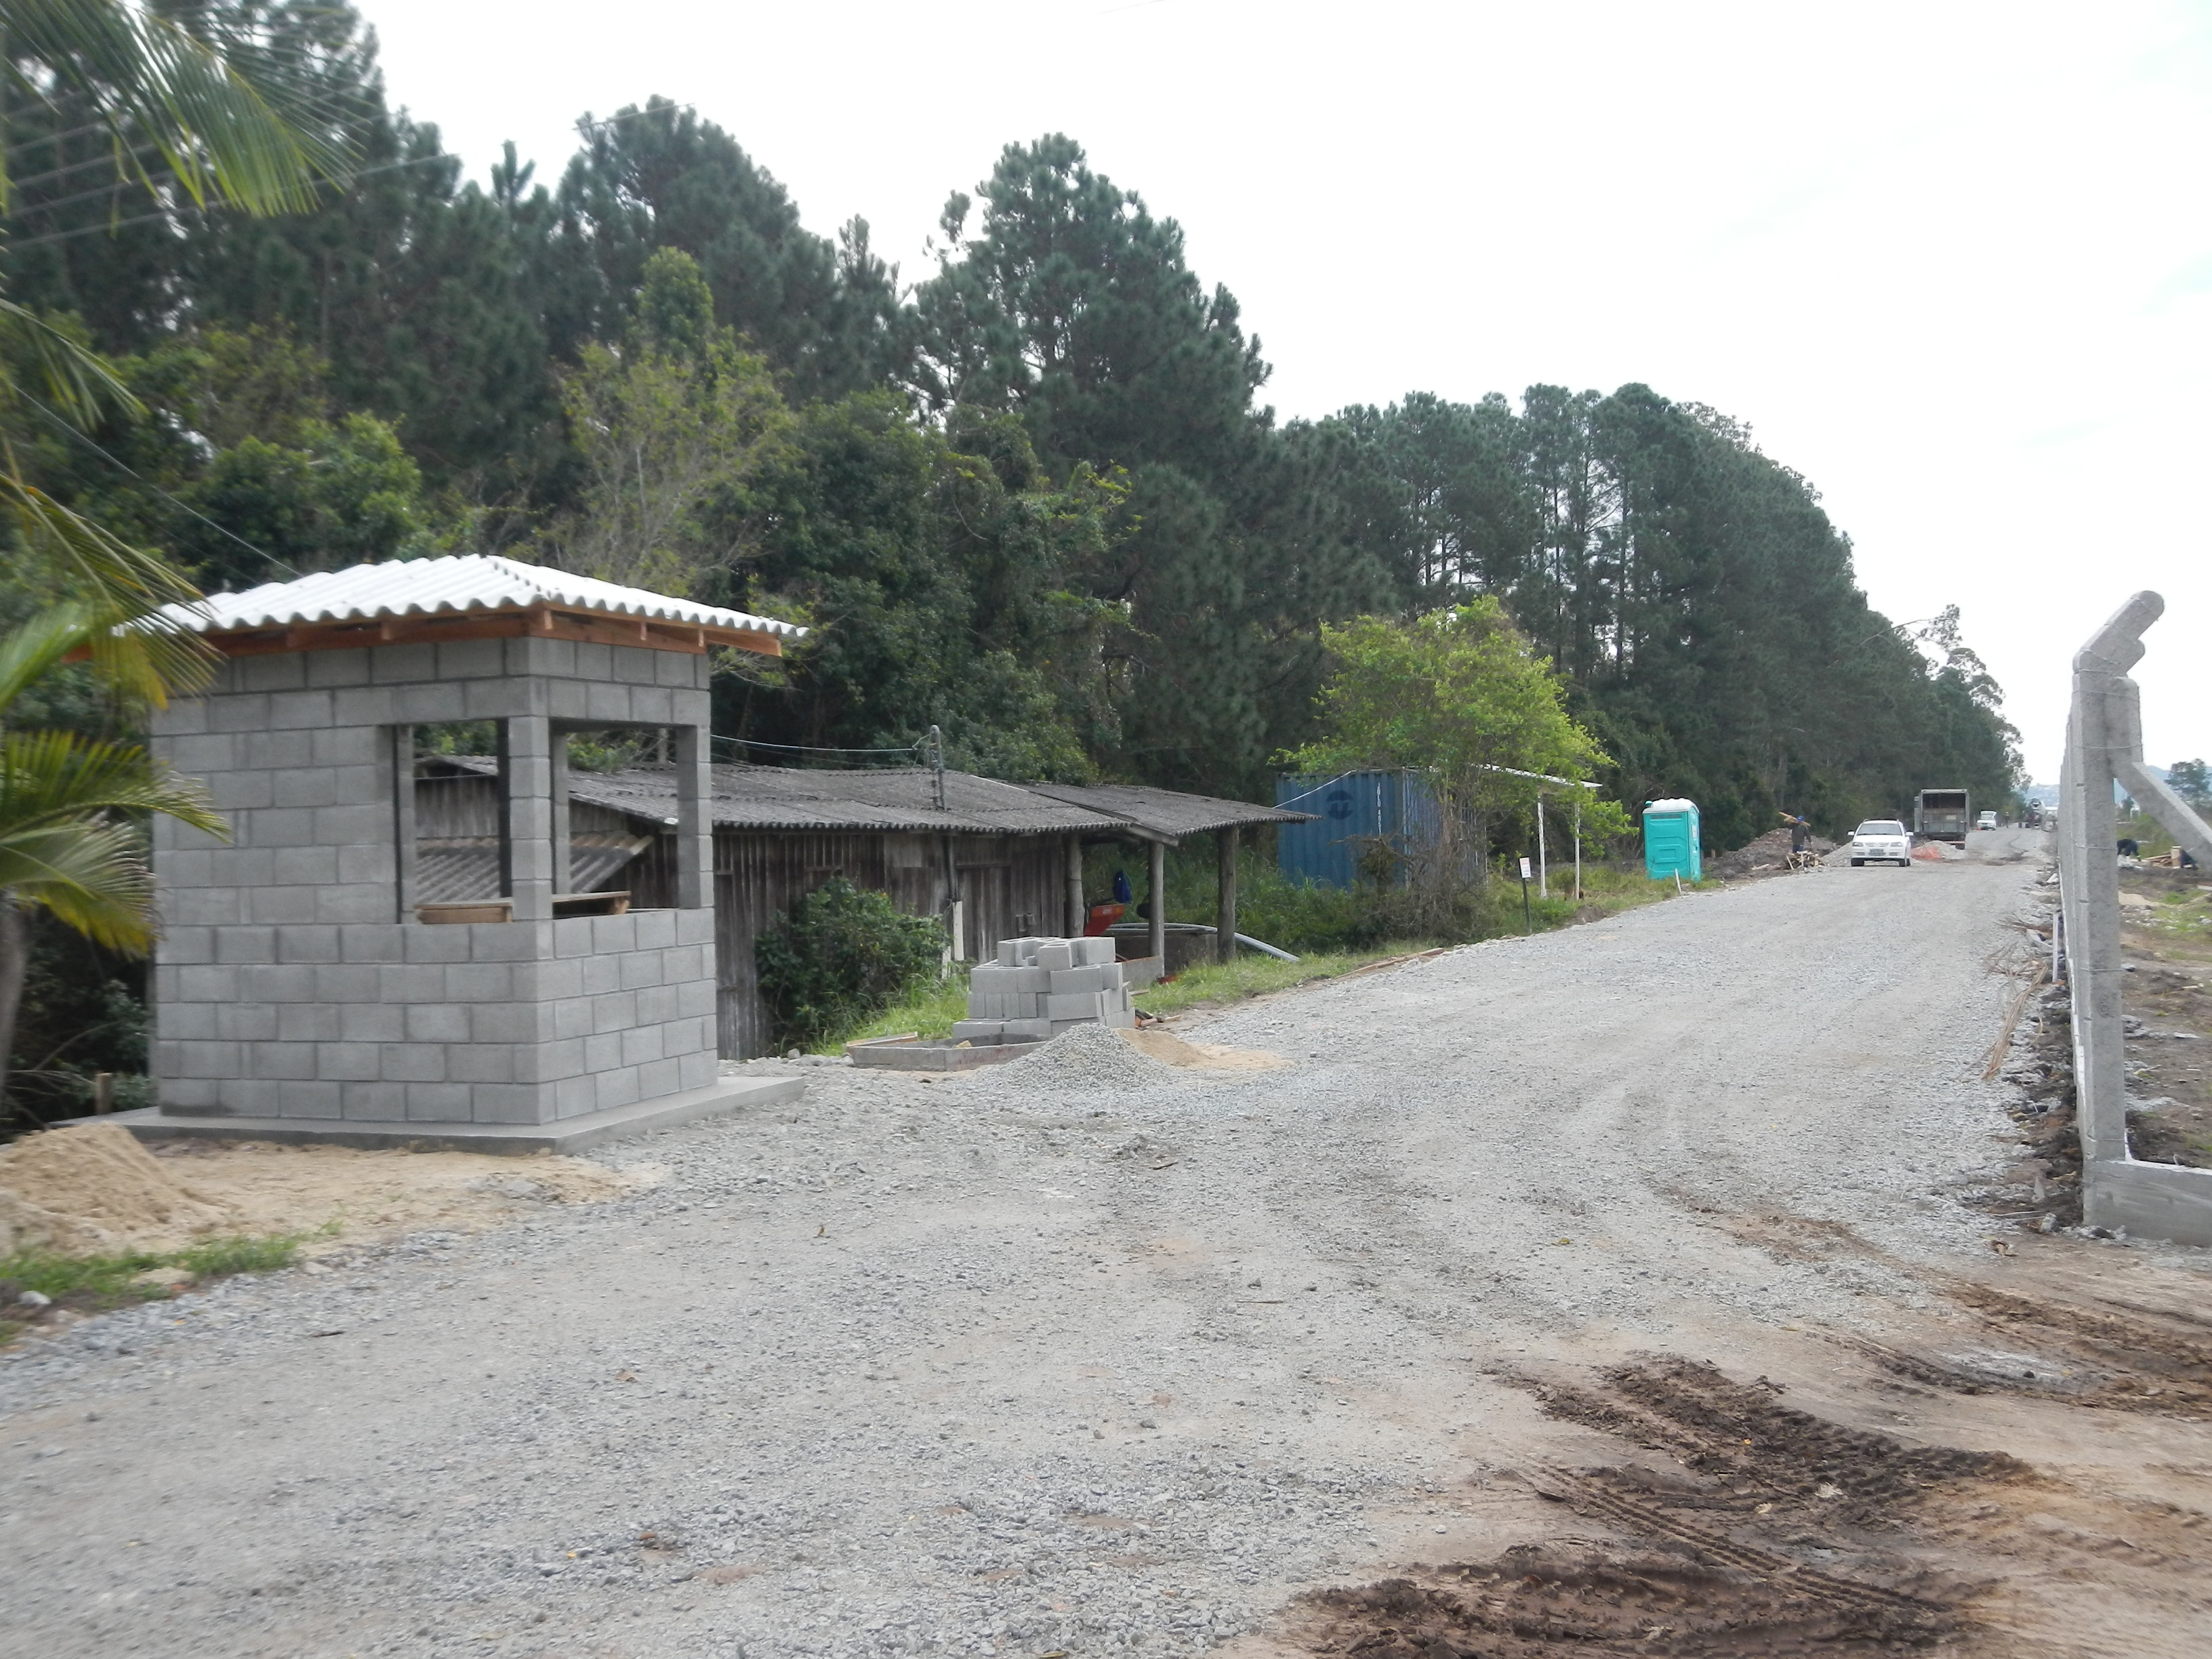 20130809 Fazenda Obras Infraero guarita abrigo casa vigilantes 002.jpg